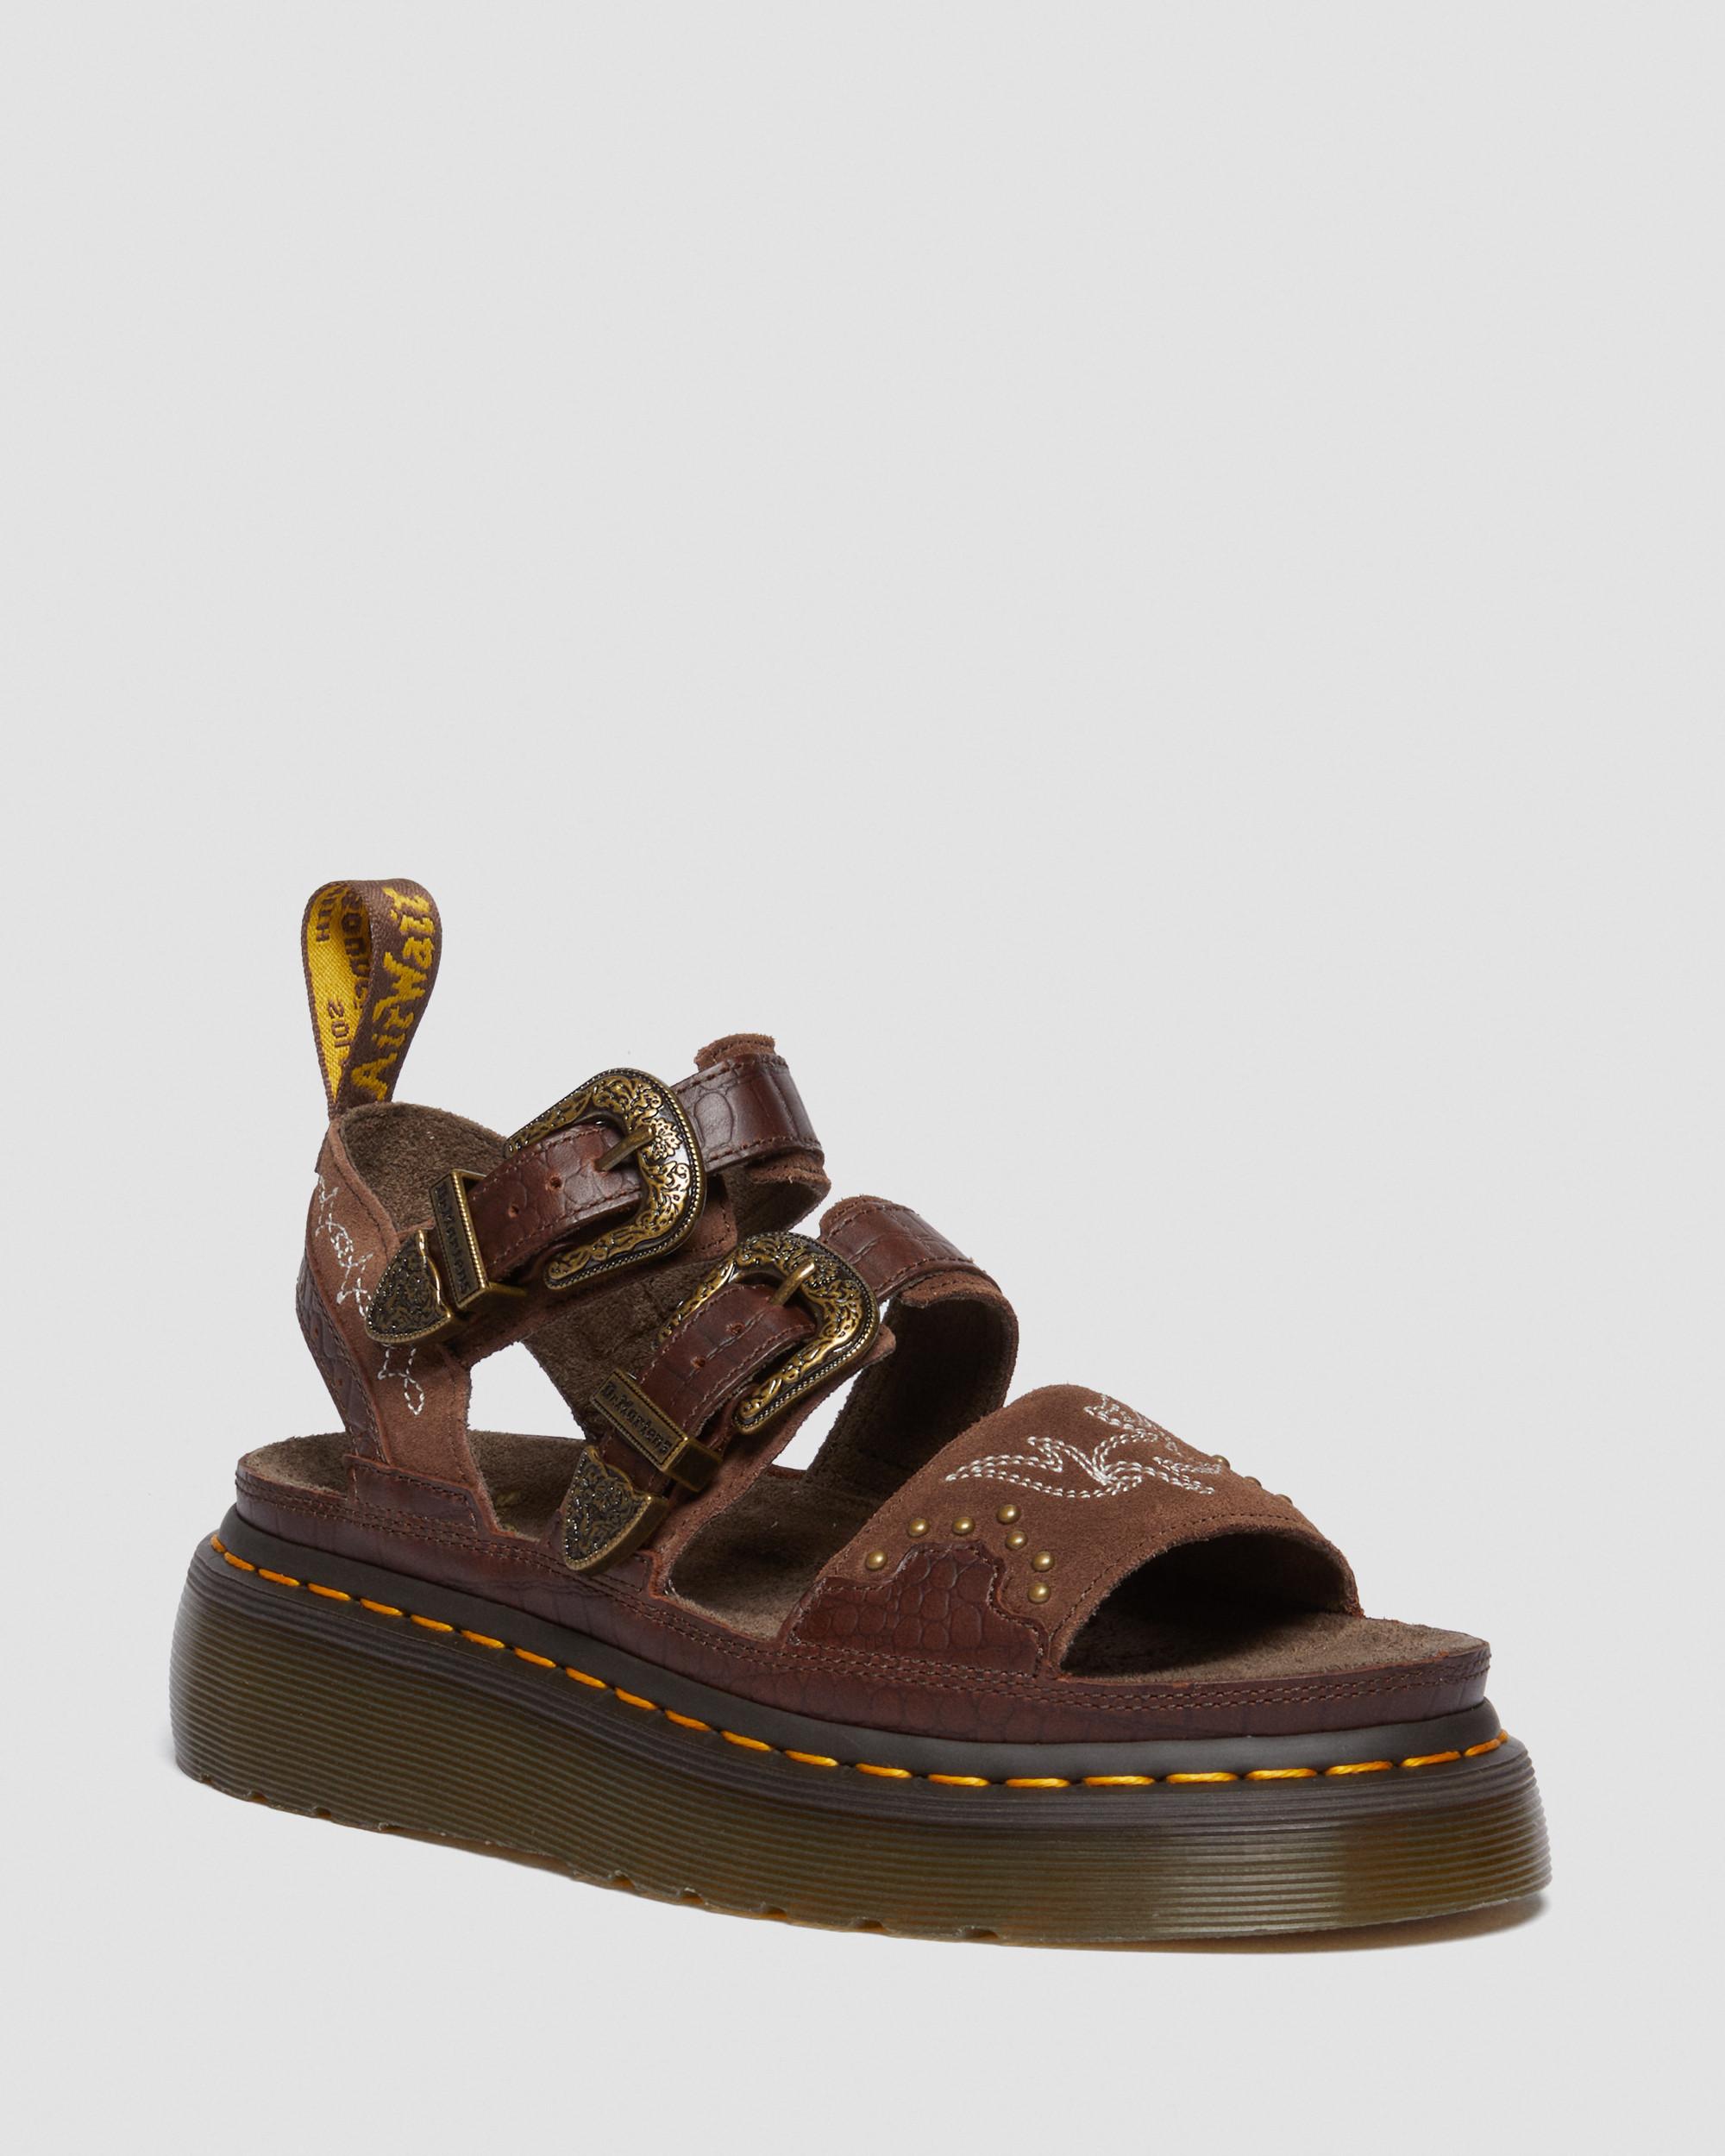 Gryphon Gothic Americana Leather Platform Sandals in Dark Brown